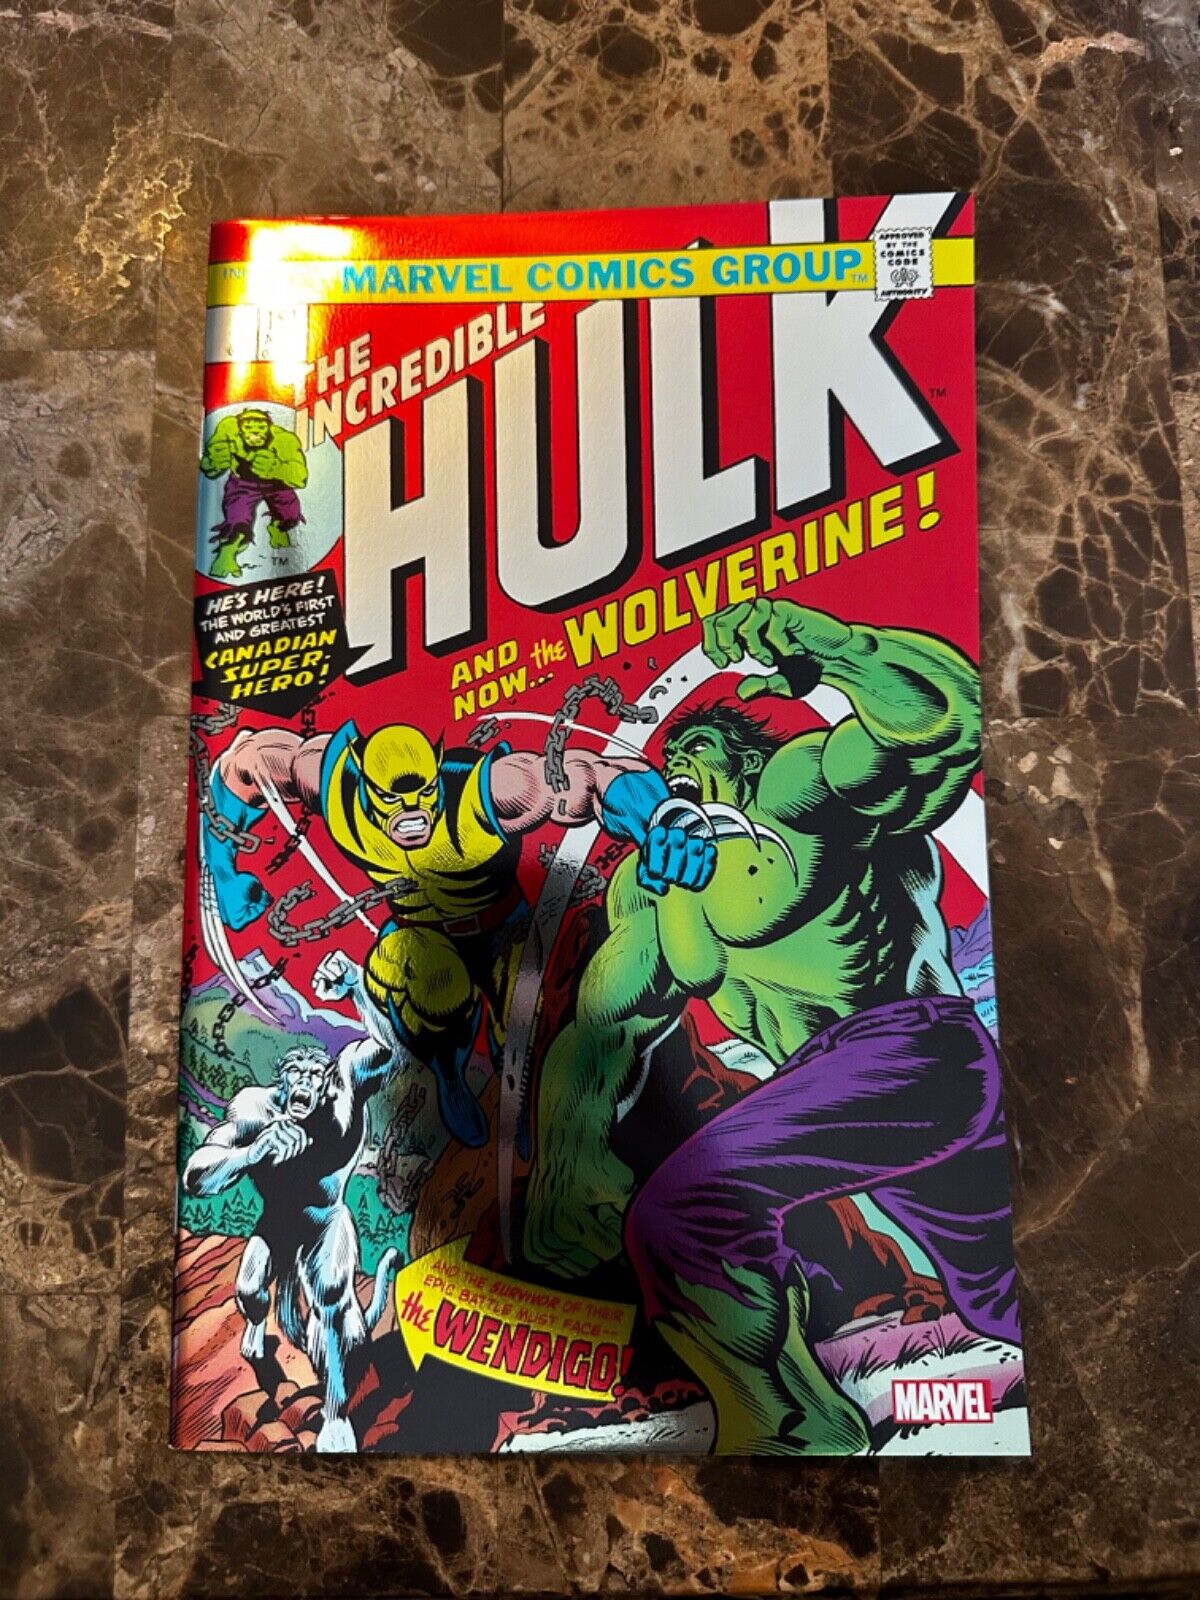 MARVEL COMICS HULK #181 Facsimile FOIL COVER 1st Appearance Of Wolverine